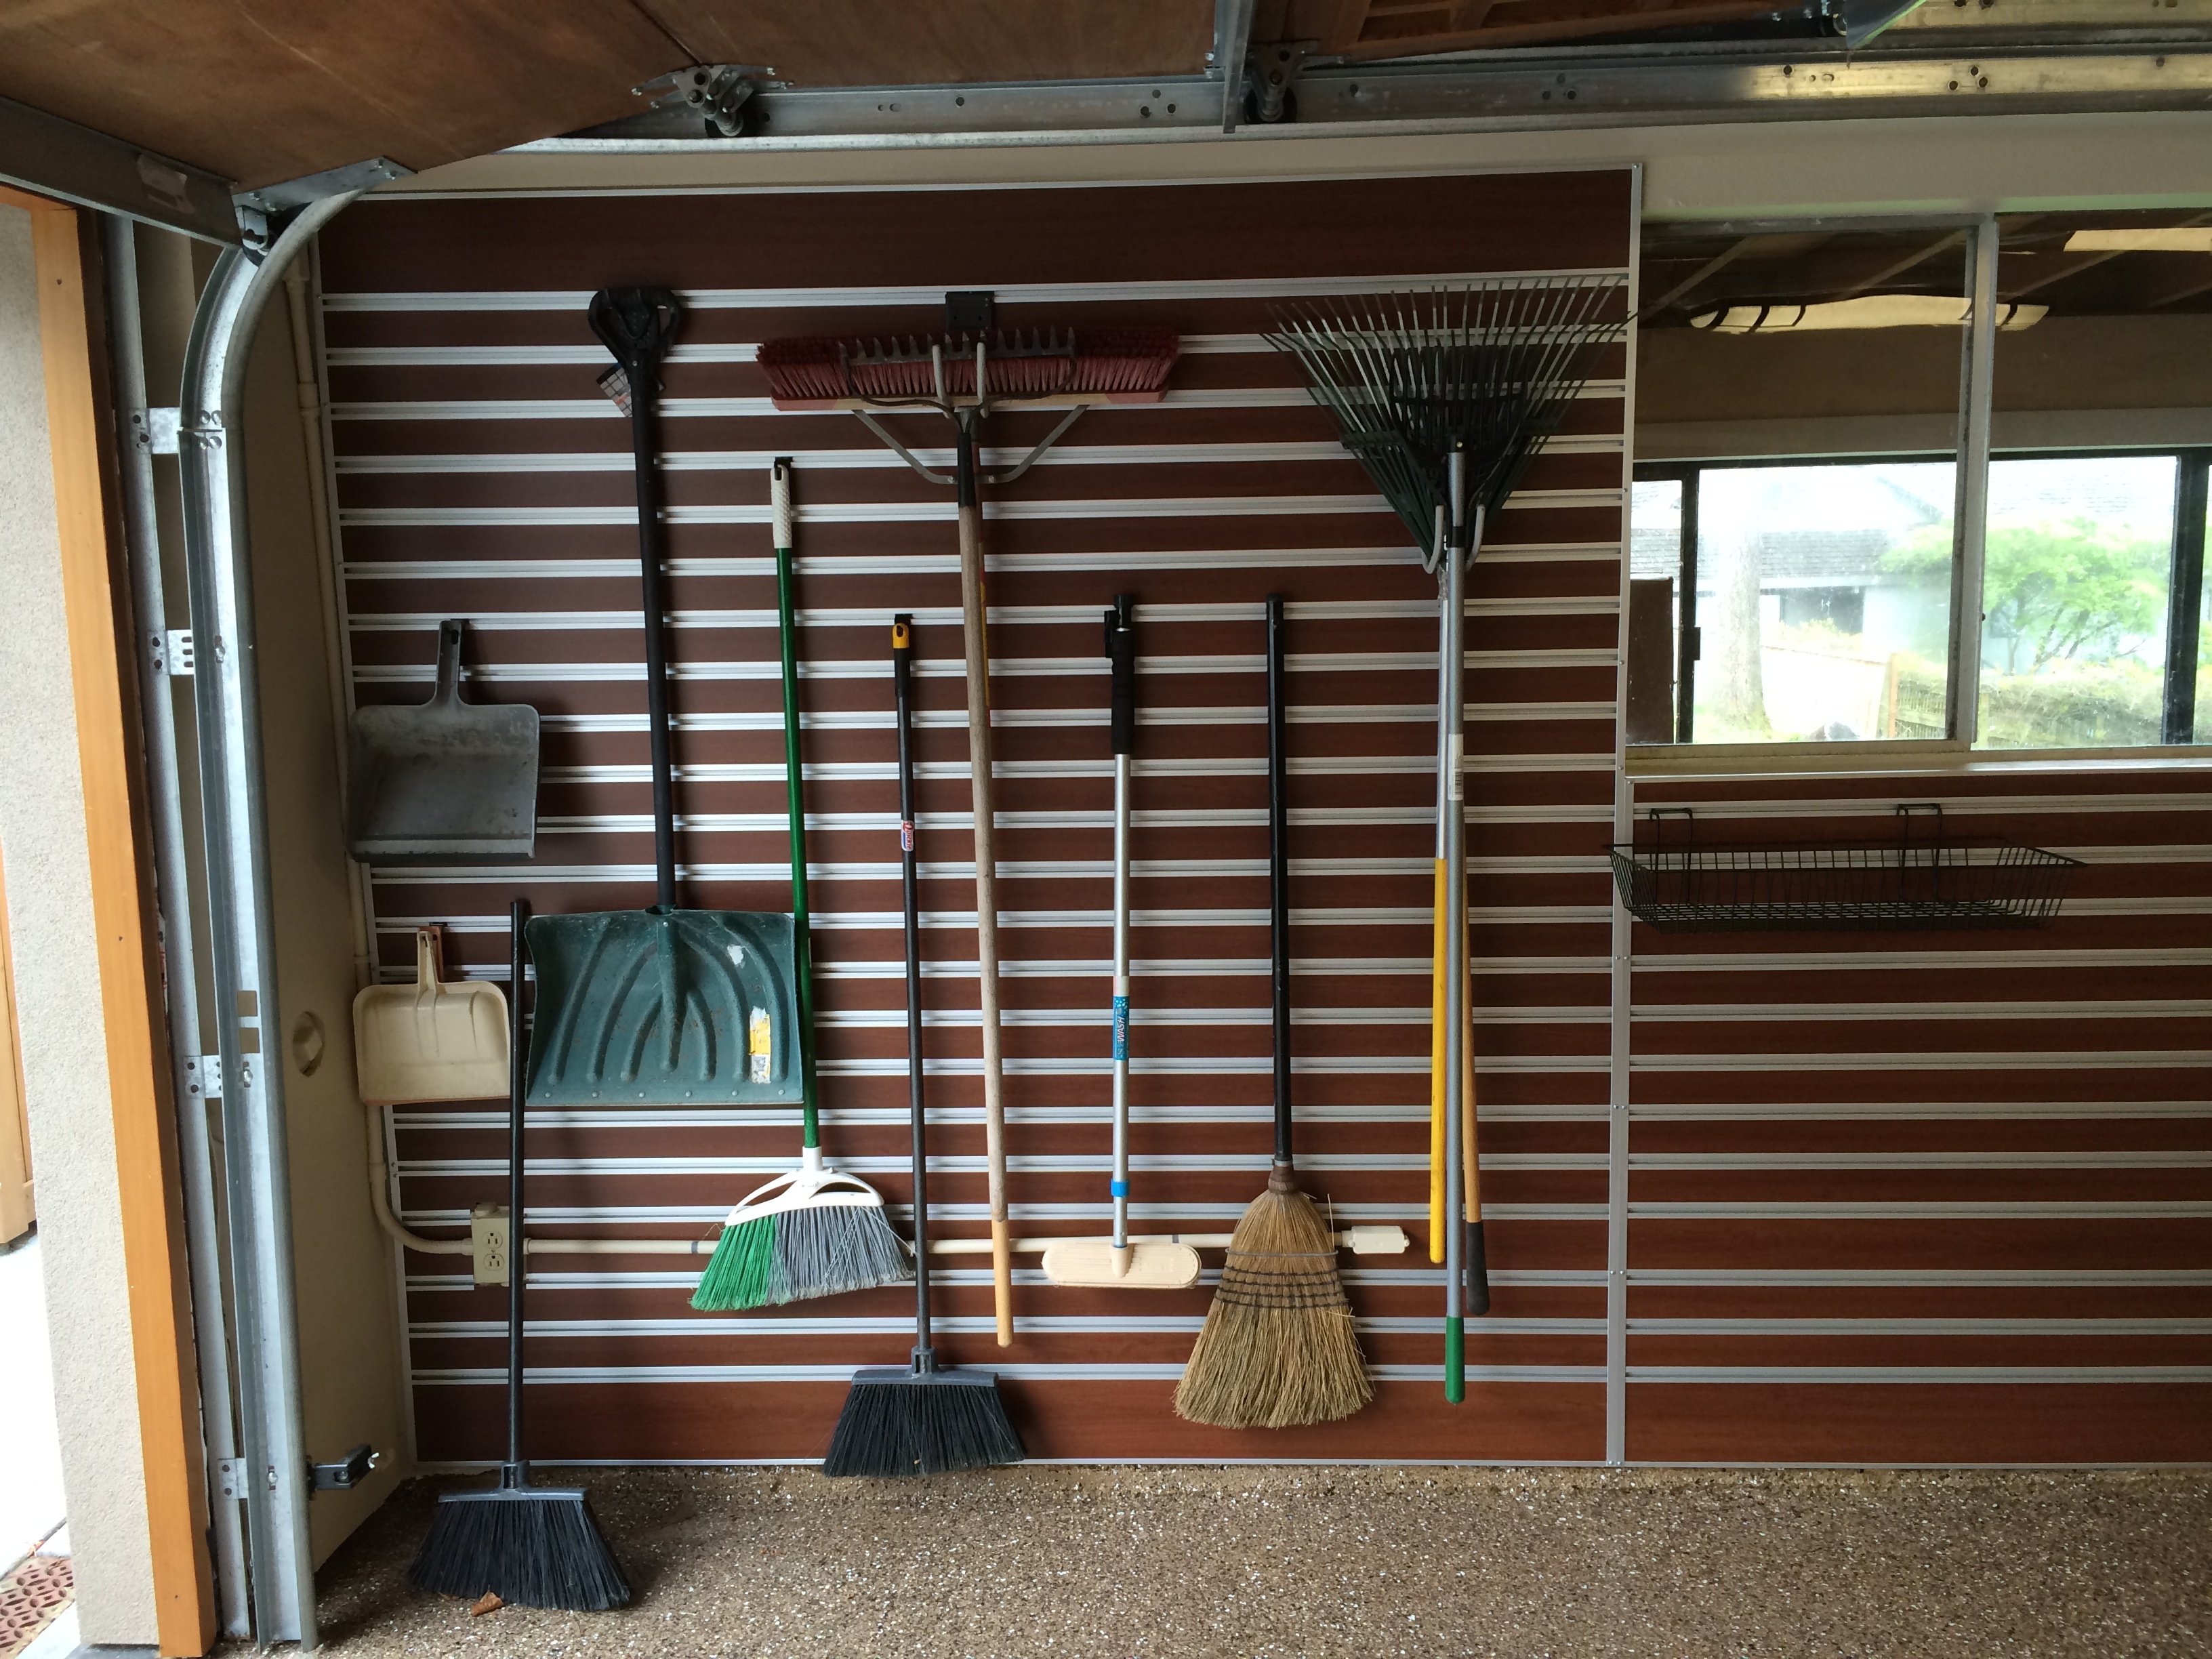 slat wall for garage organization of yard tools